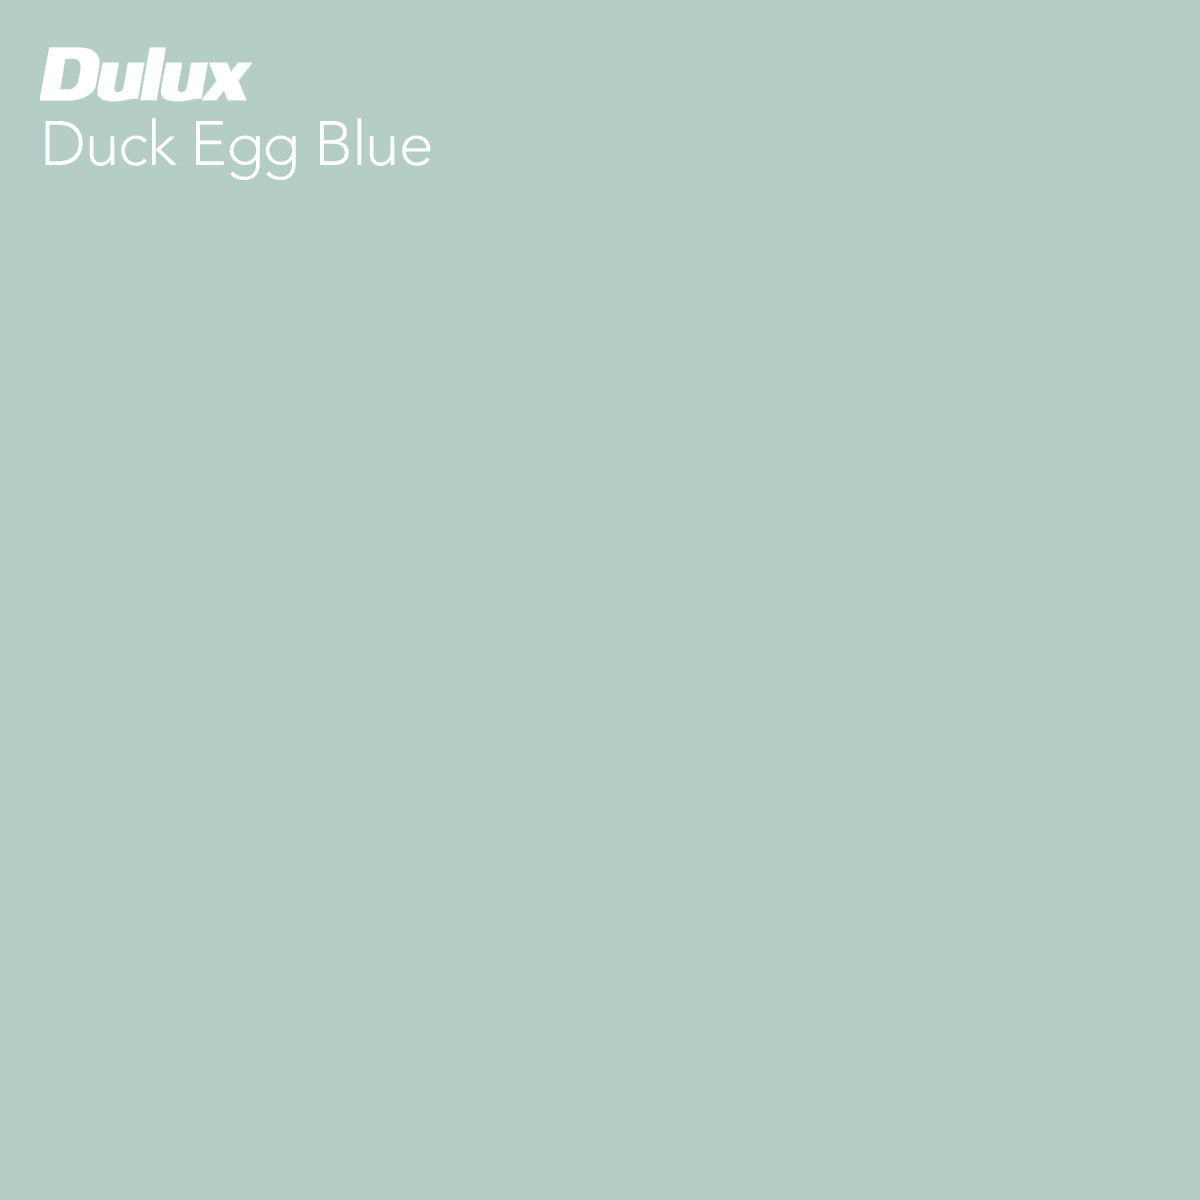 Duck Egg Blue Paint Swatch